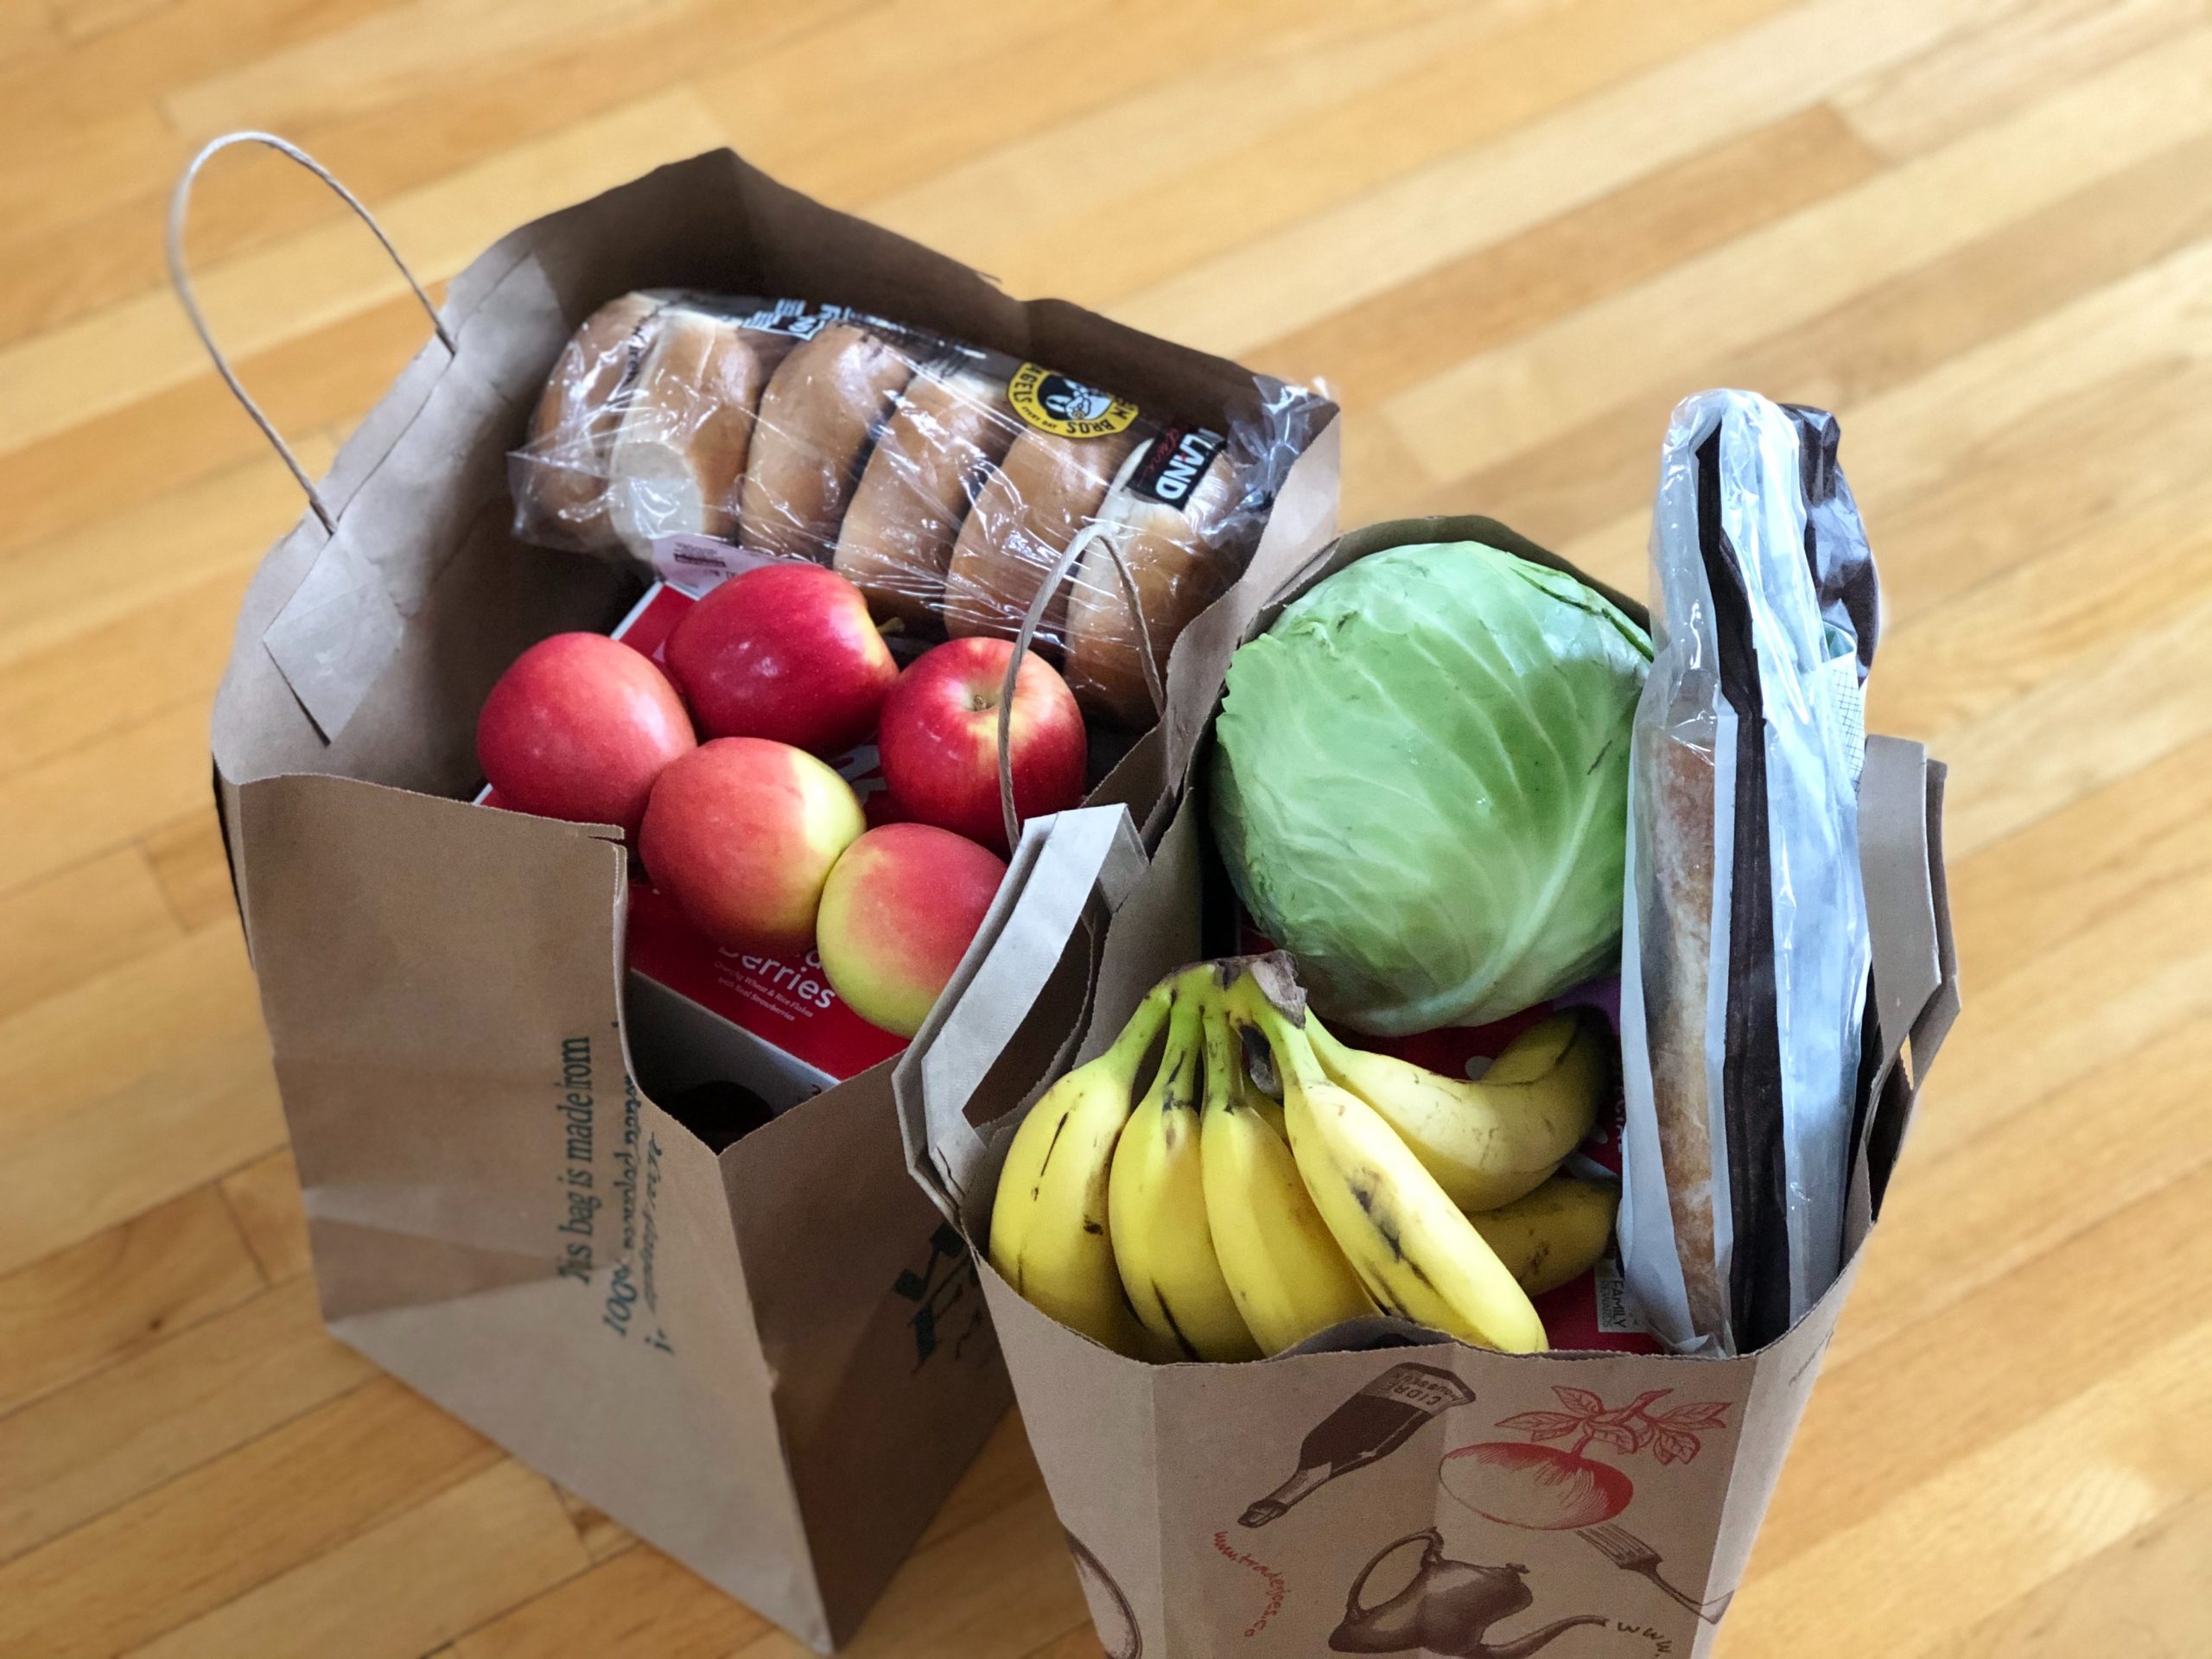 Bild: Maria Lin Kim, Paper bags with groceries including fruits and vegetables and bread, CC0, via unsplash.com (keine Änderungen vorgenommen)